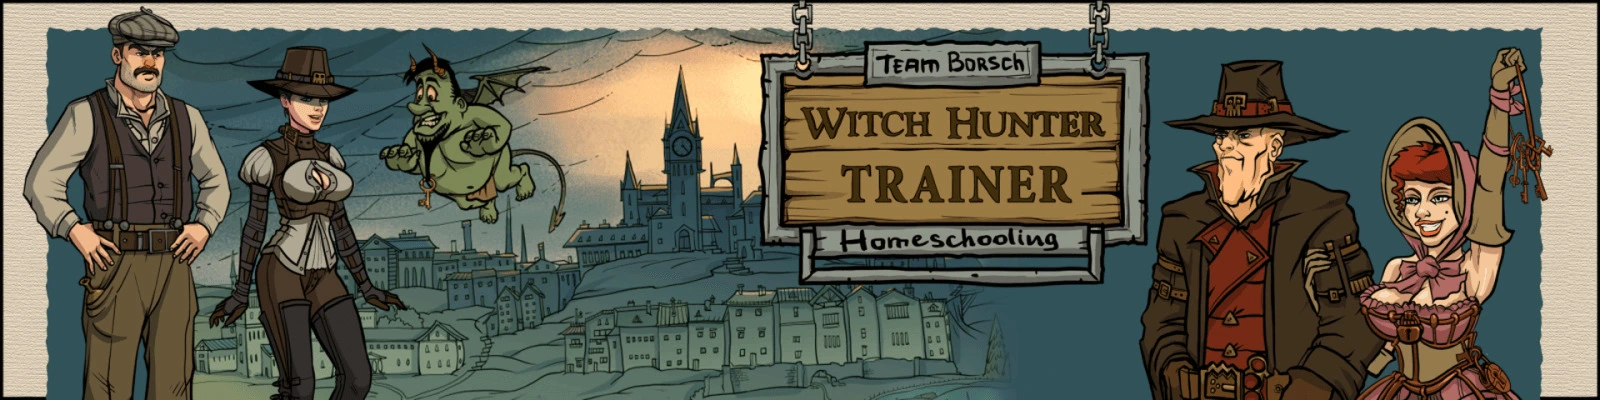 Witch Hunter Trainer [vOctober] main image